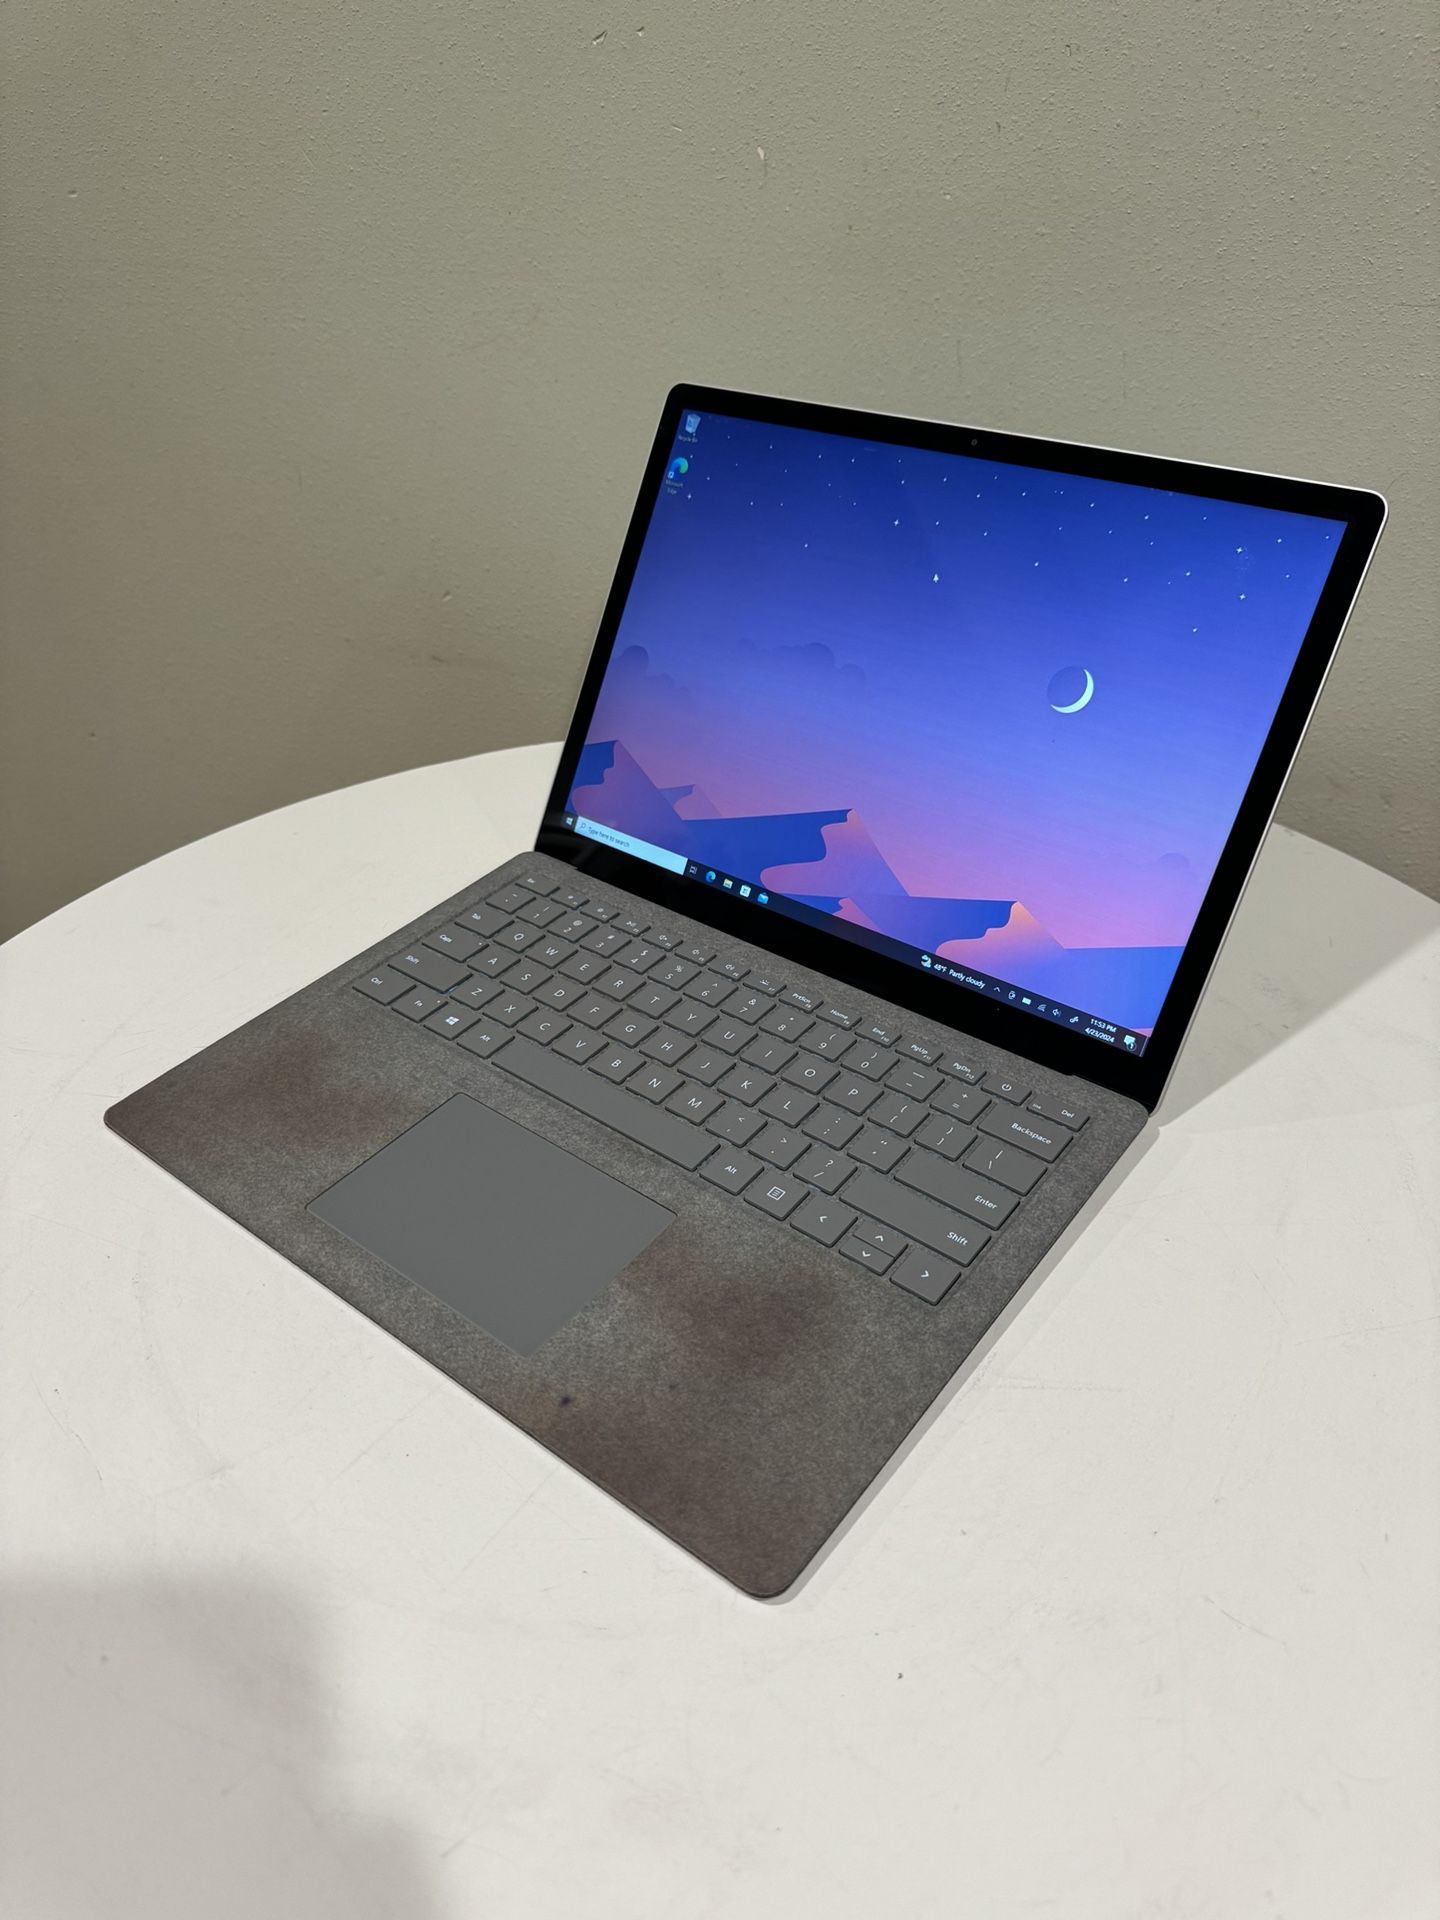 Microsoft Surface Laptop Computer PC Touchscreen Windows 10 Pro